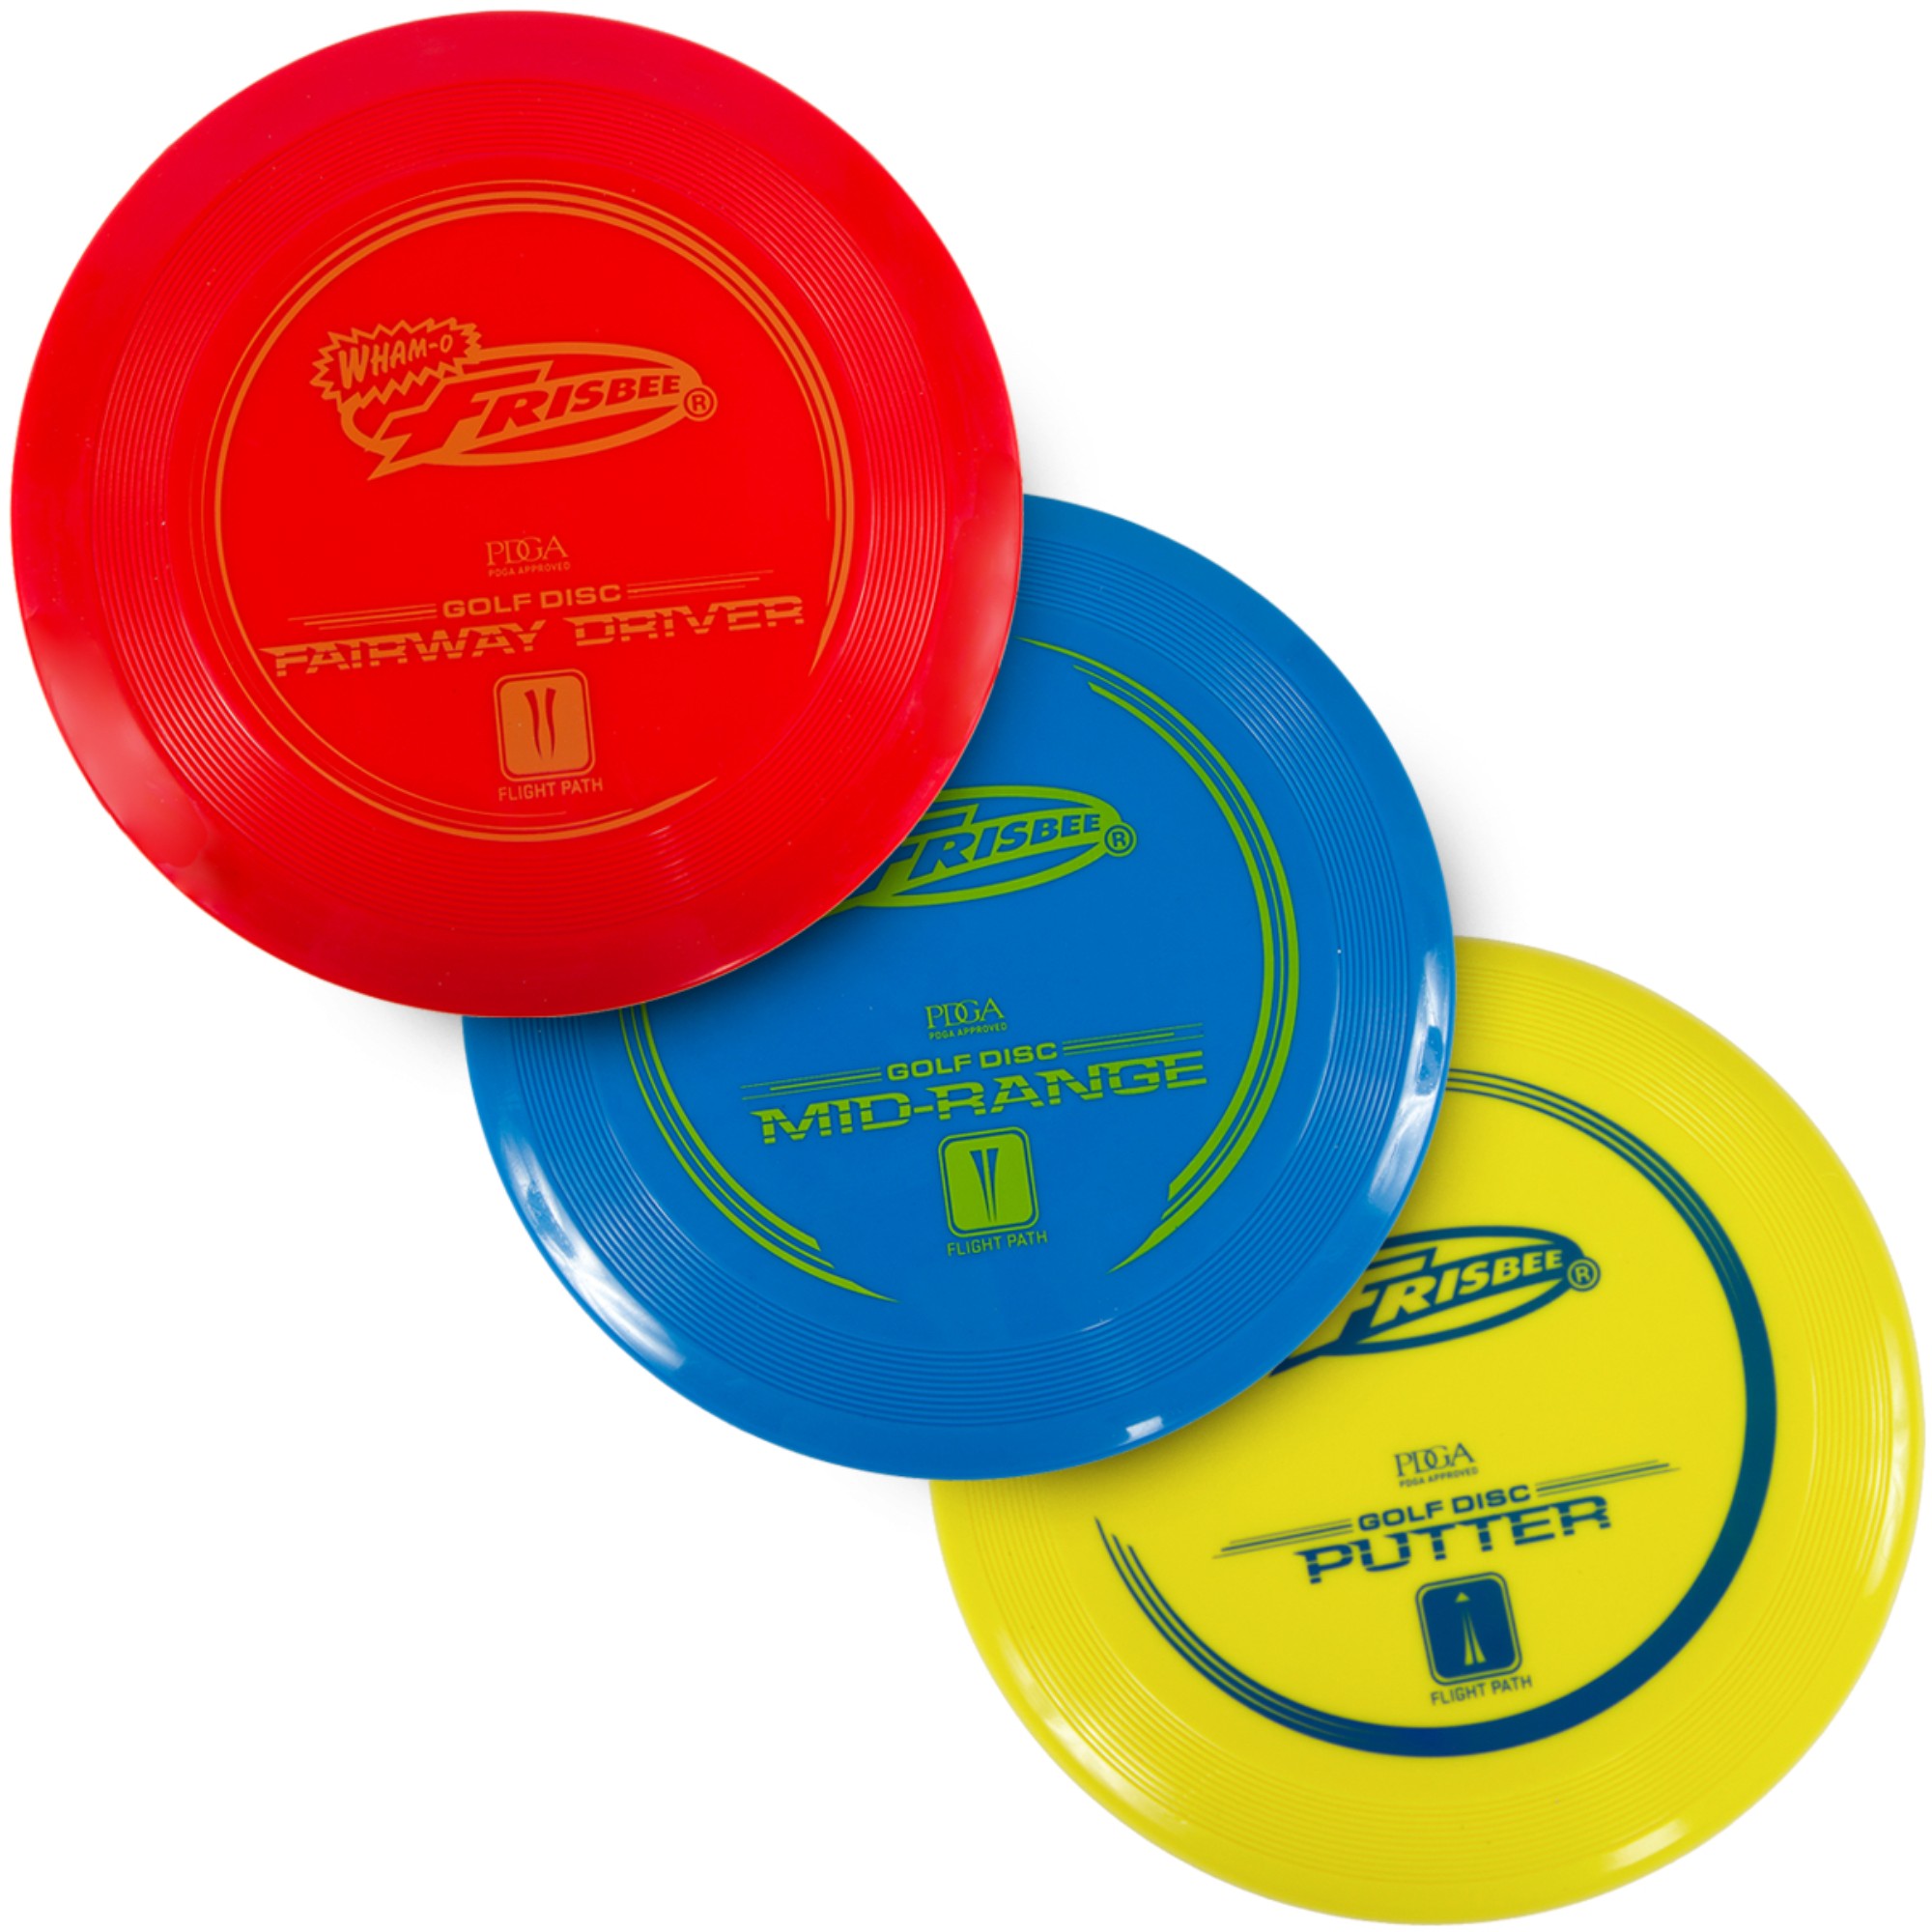 Disc golf frisbees